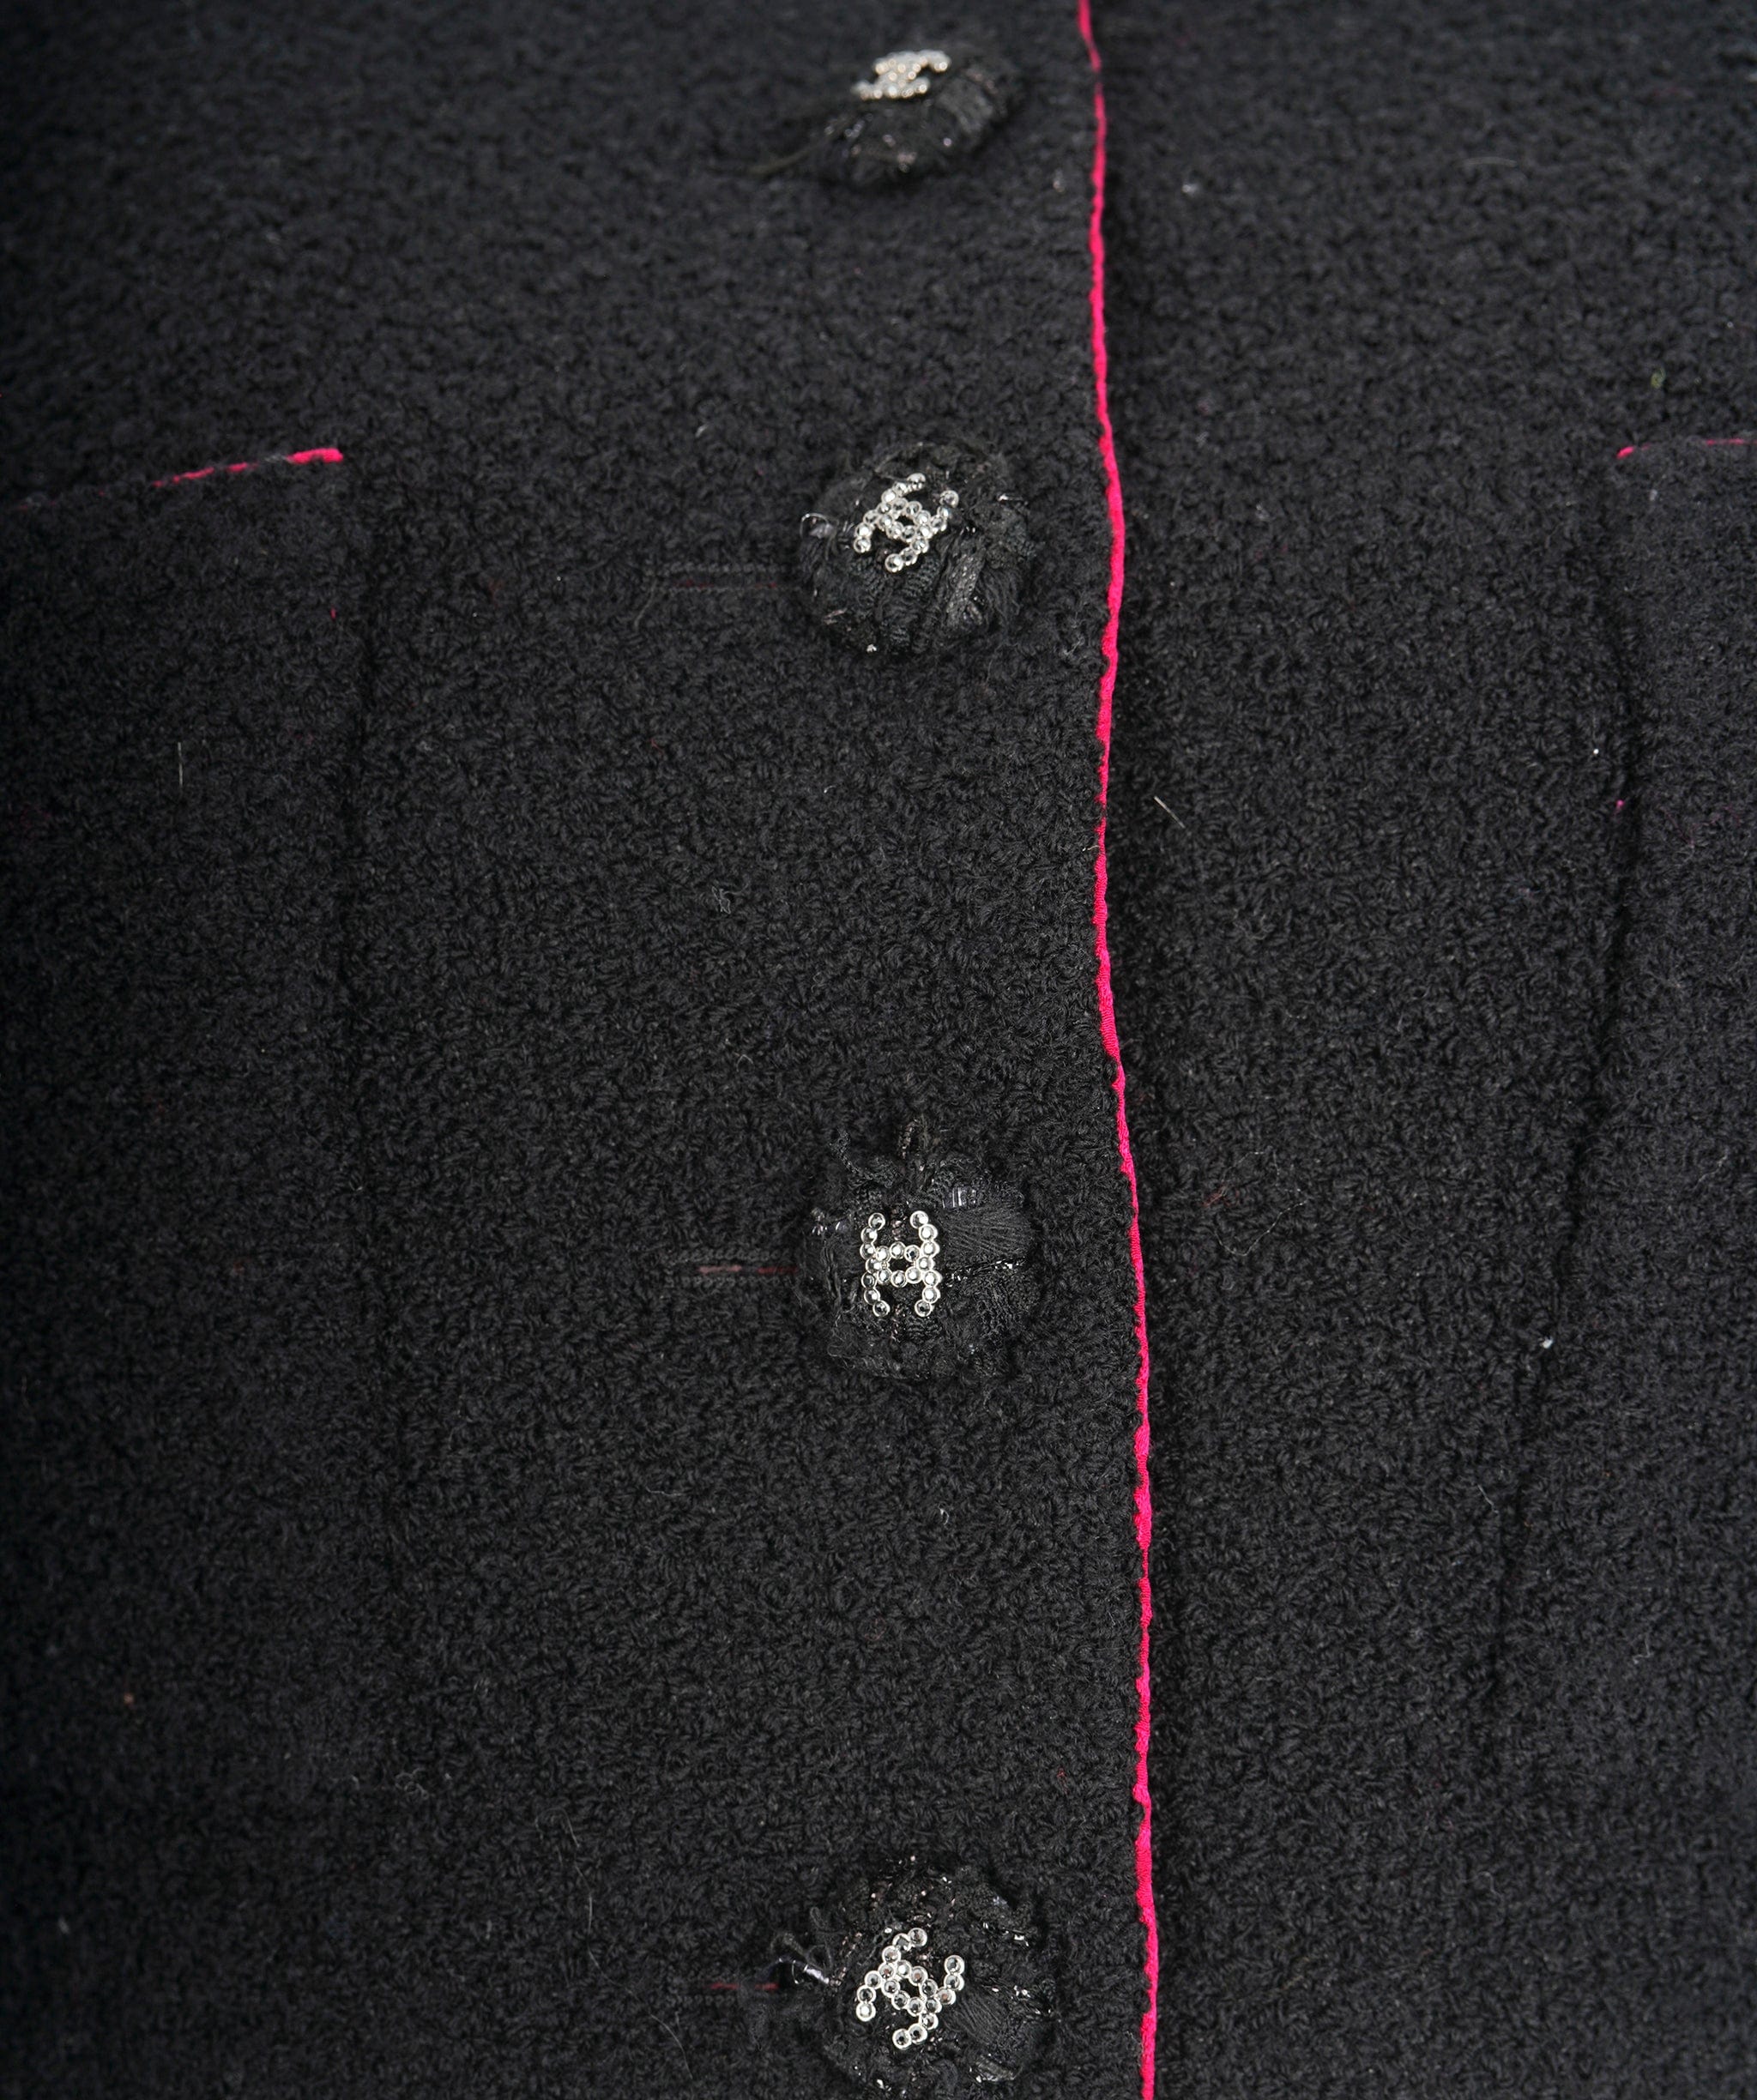 Chanel Chanel black little jacket cropped FR36 P71725V63149 AVC1963